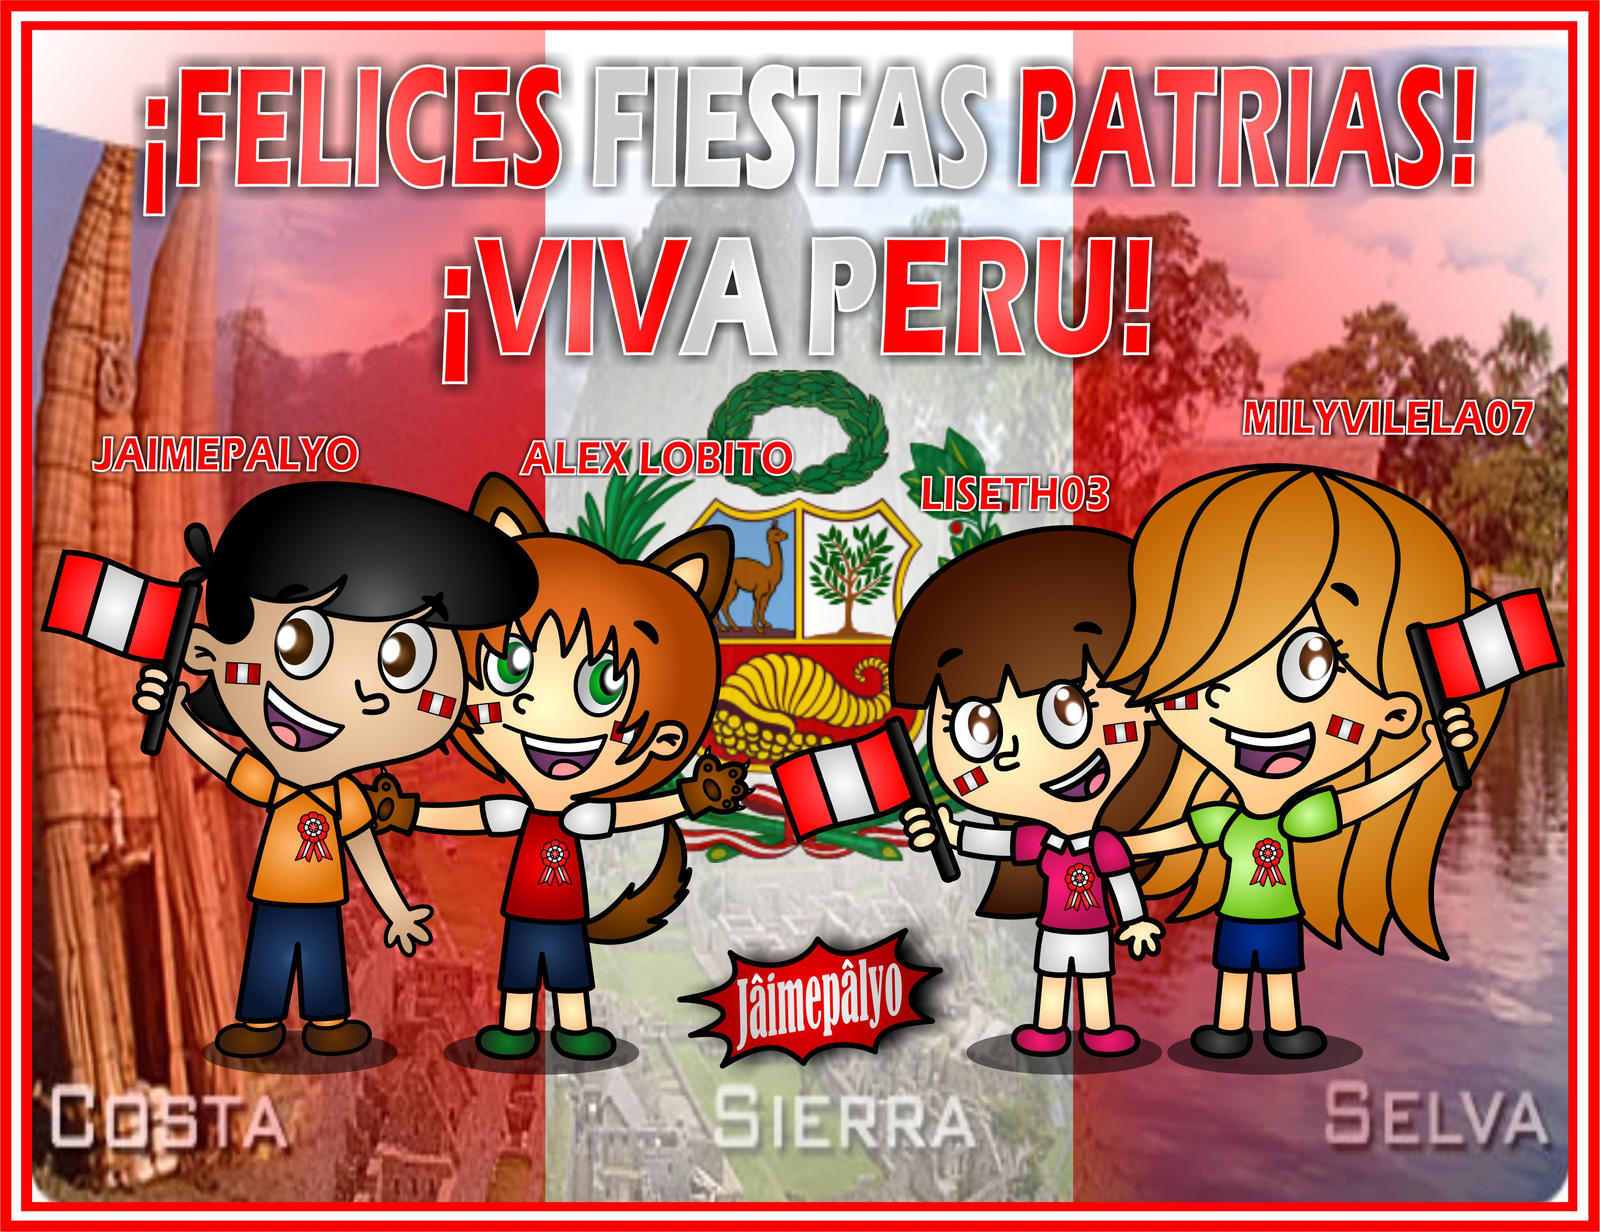 Felices Fiestas Patrias 2013 by jaimepalyo on DeviantArt